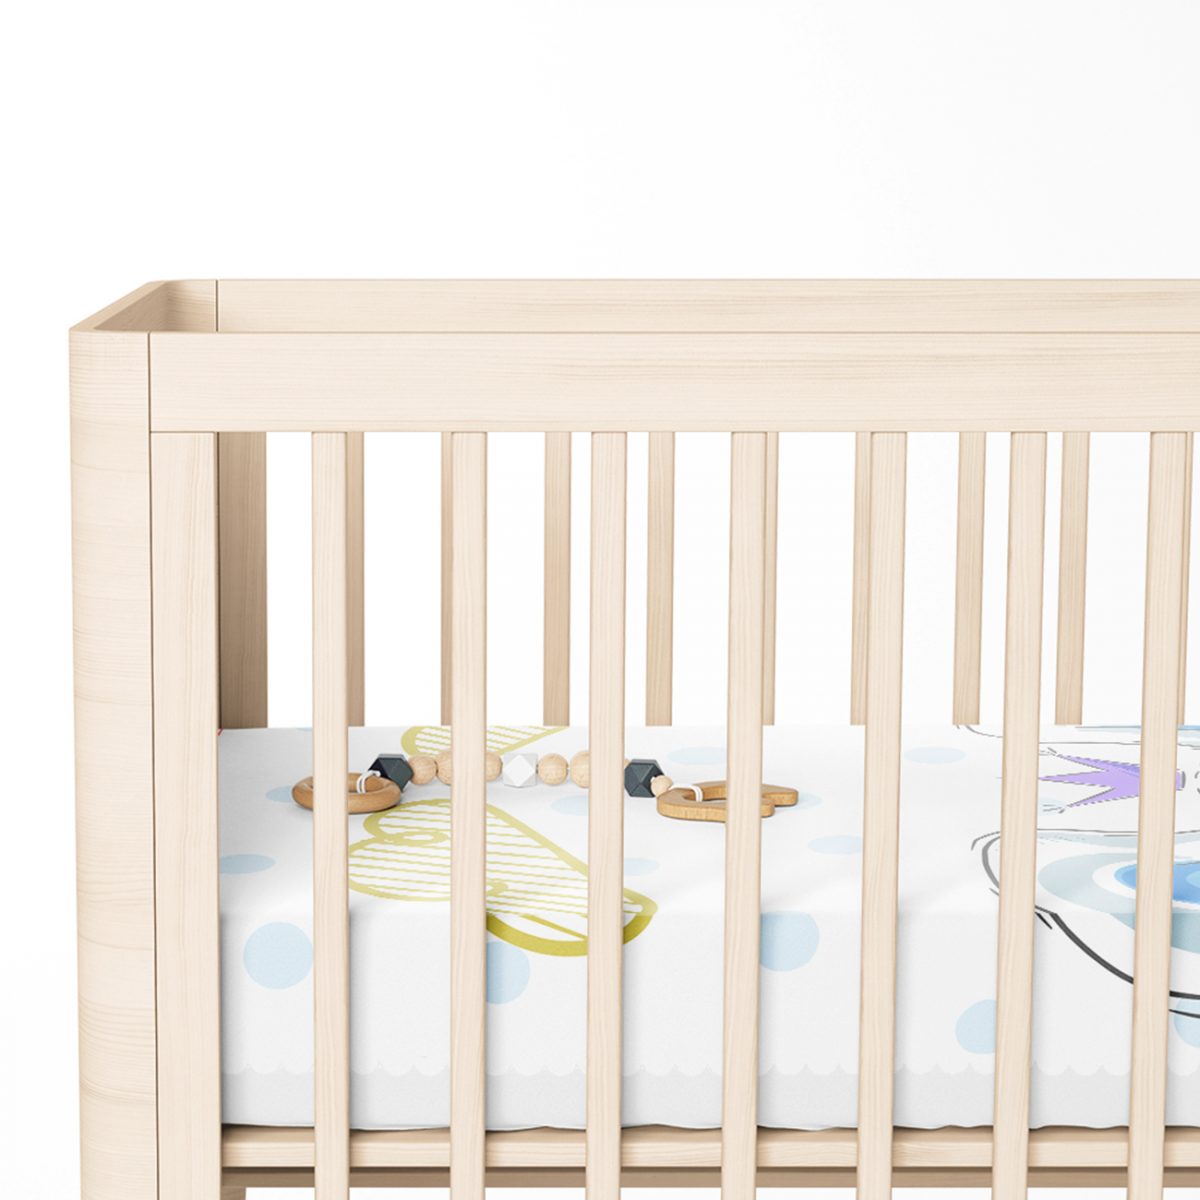 Mavi Sevimli Fil Tasarımlı Çocuk Odası Yatak Örtüsü Realhomes